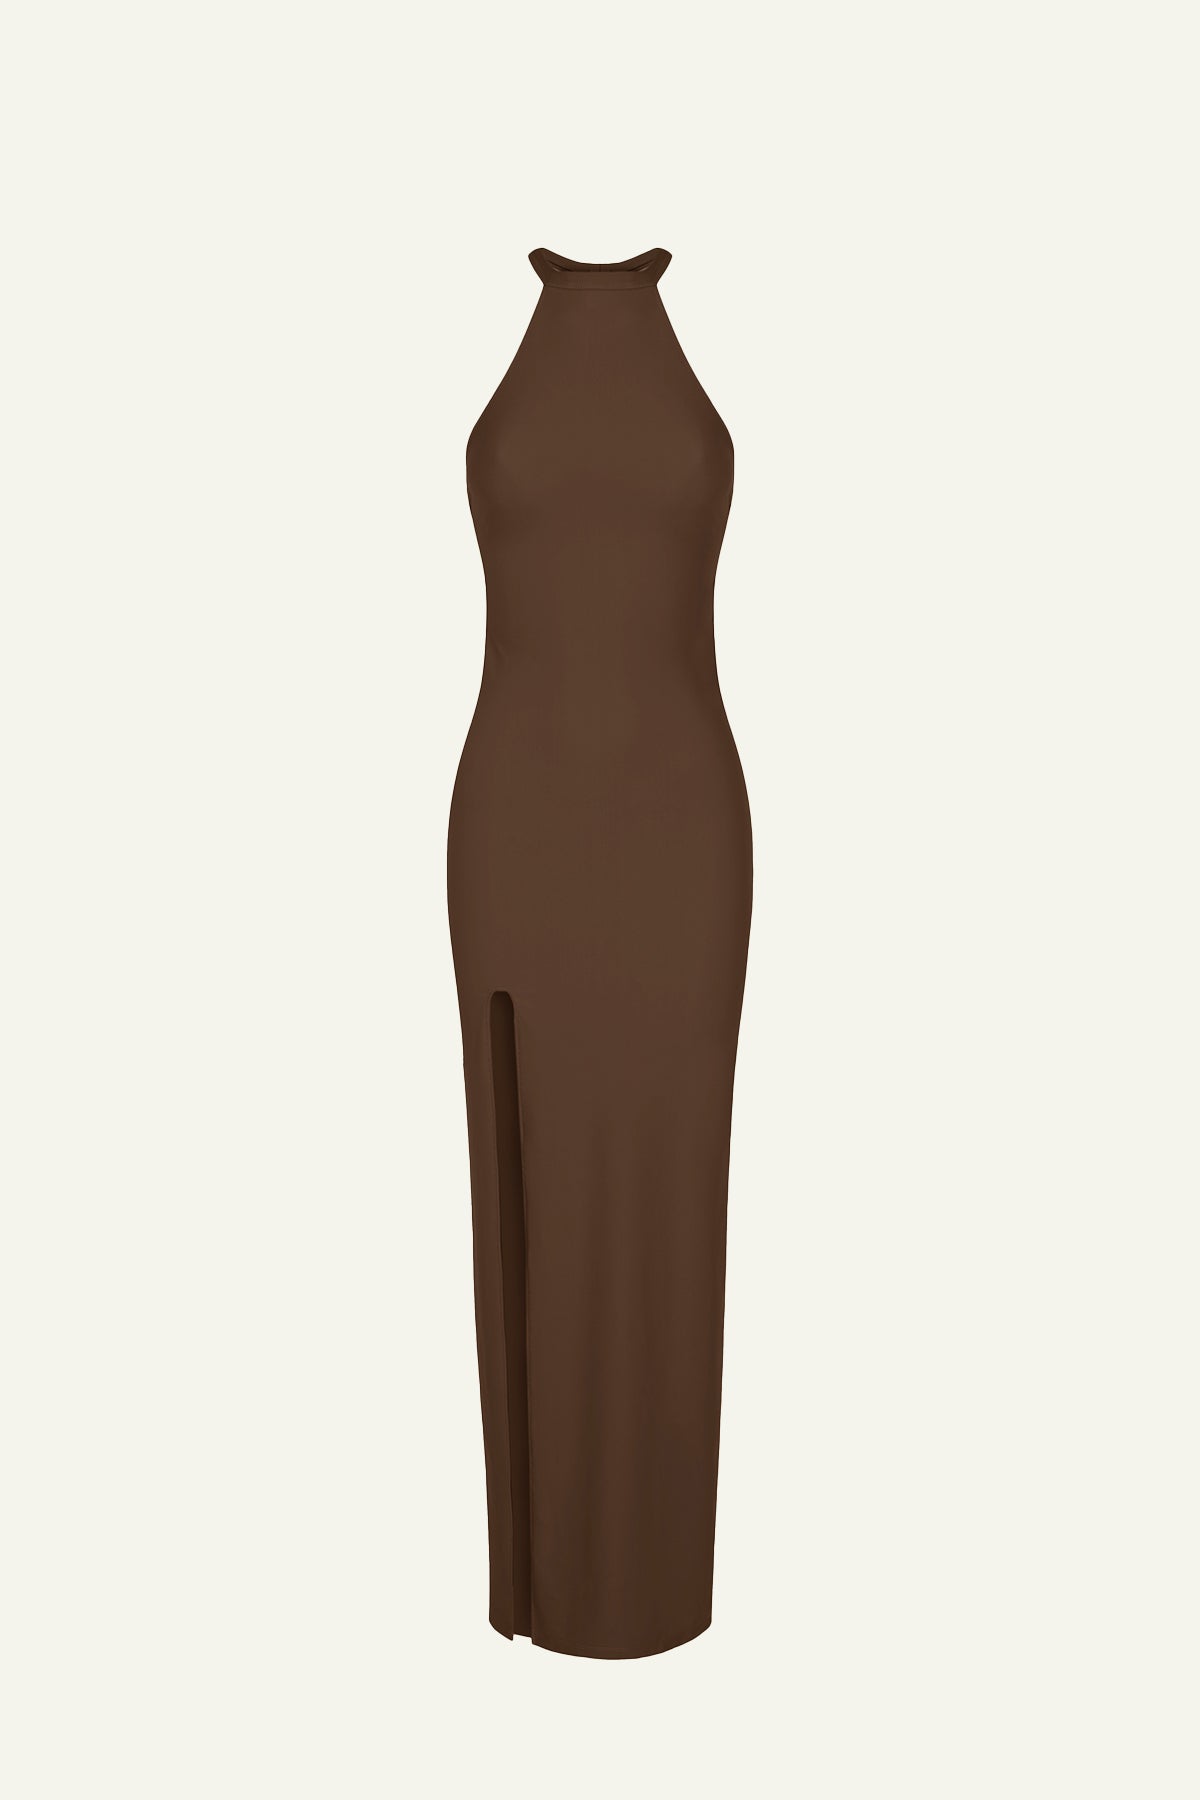 OLIVIA HALTER DRESS - CHOCOLATE - (Limited Edition- 150 Units)